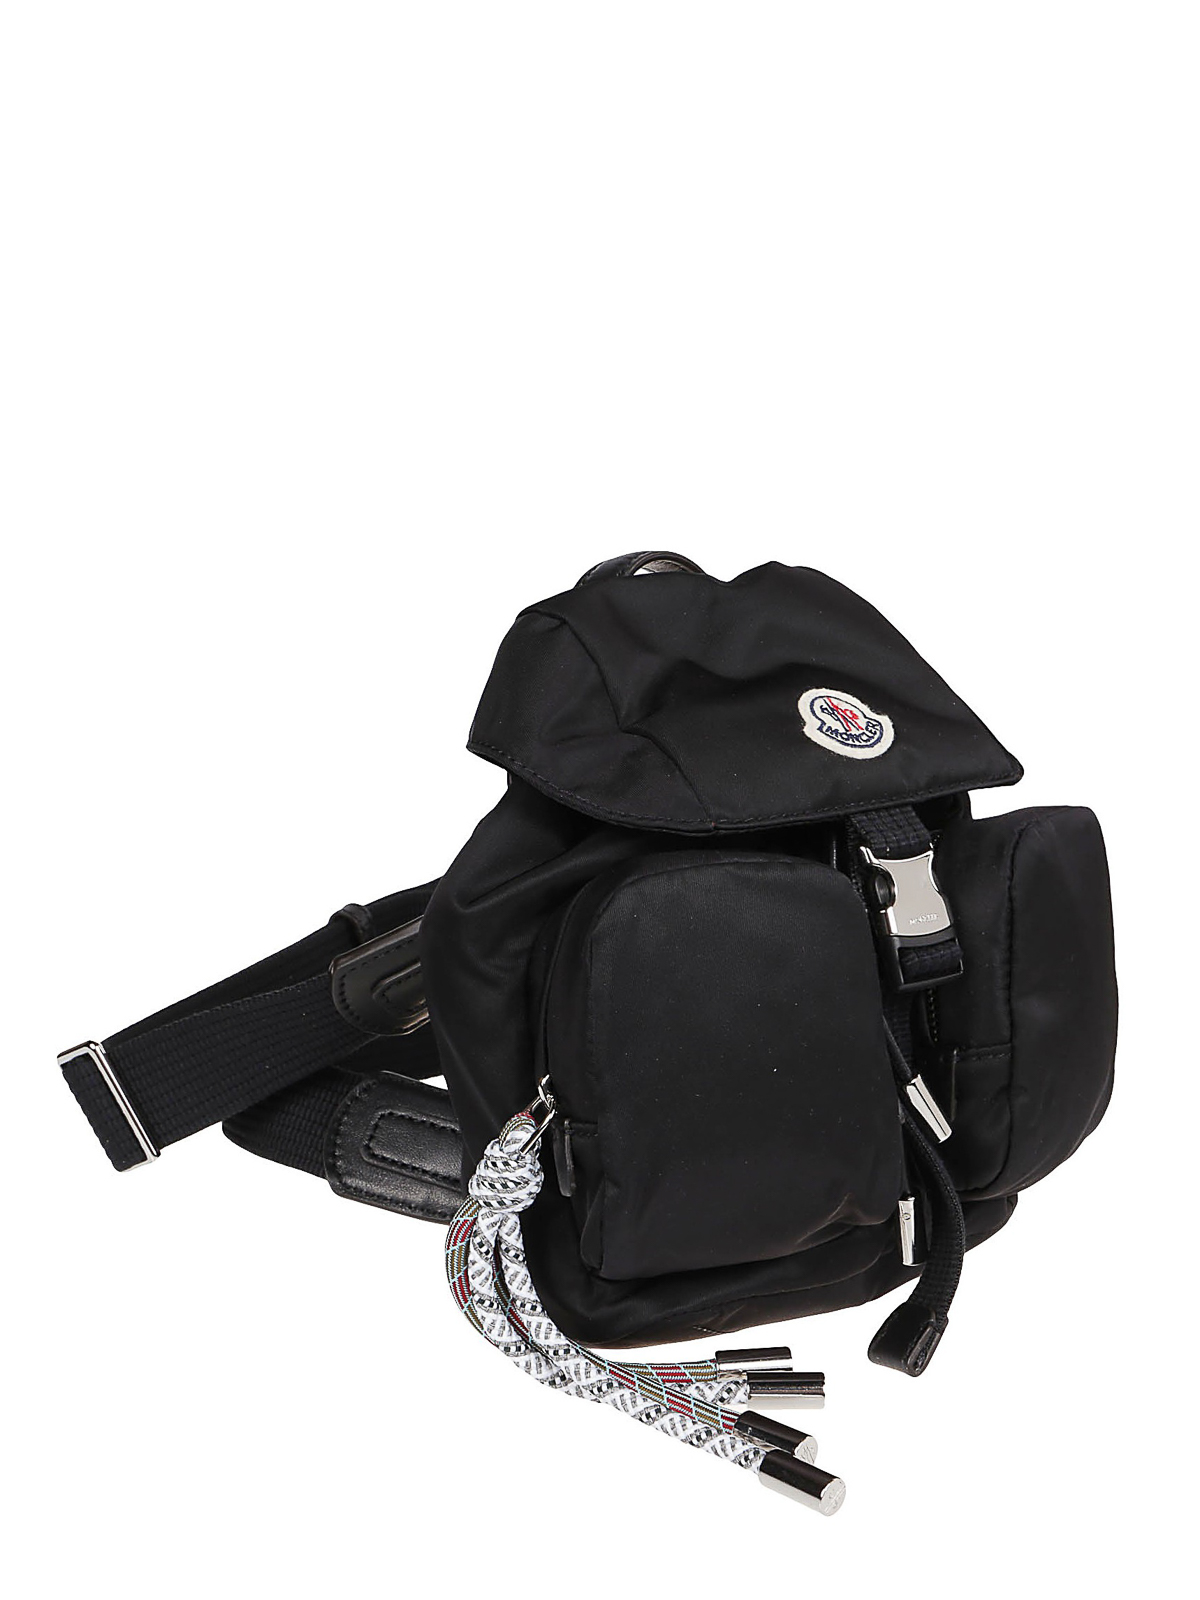 Moncler Backpack DAUPHINE Nylon online shopping 